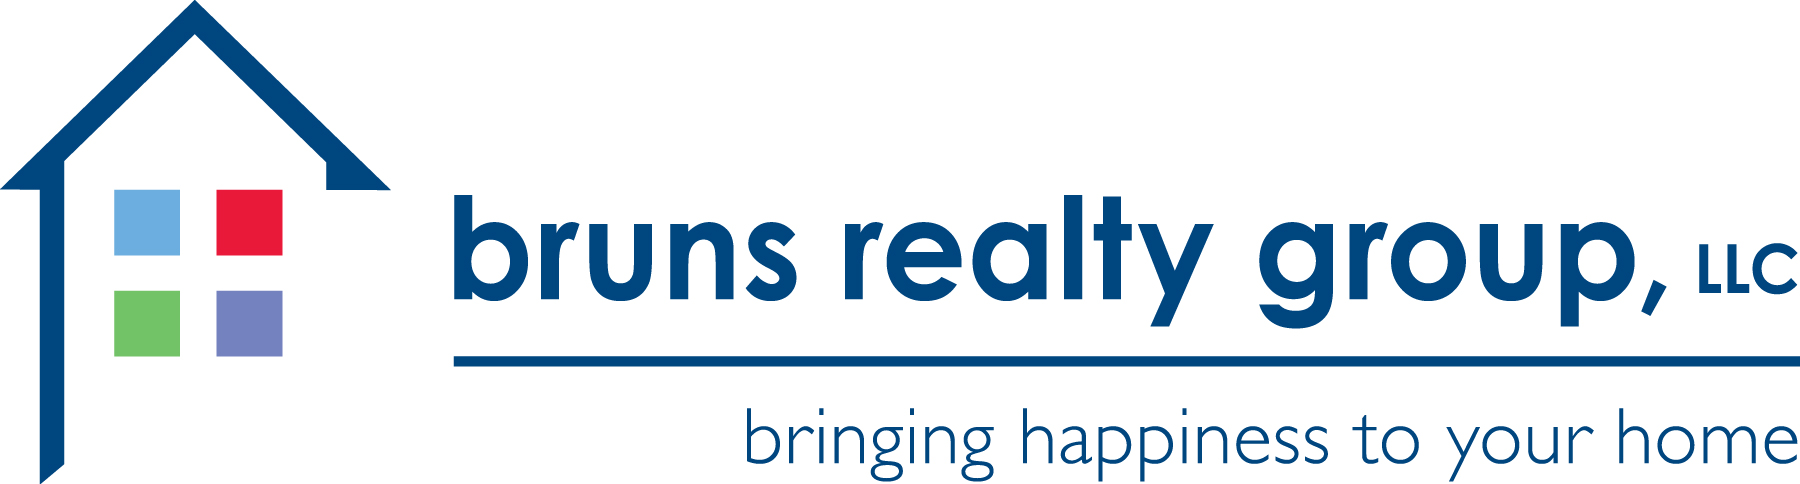 Bruns Realty Group, LLC company logo